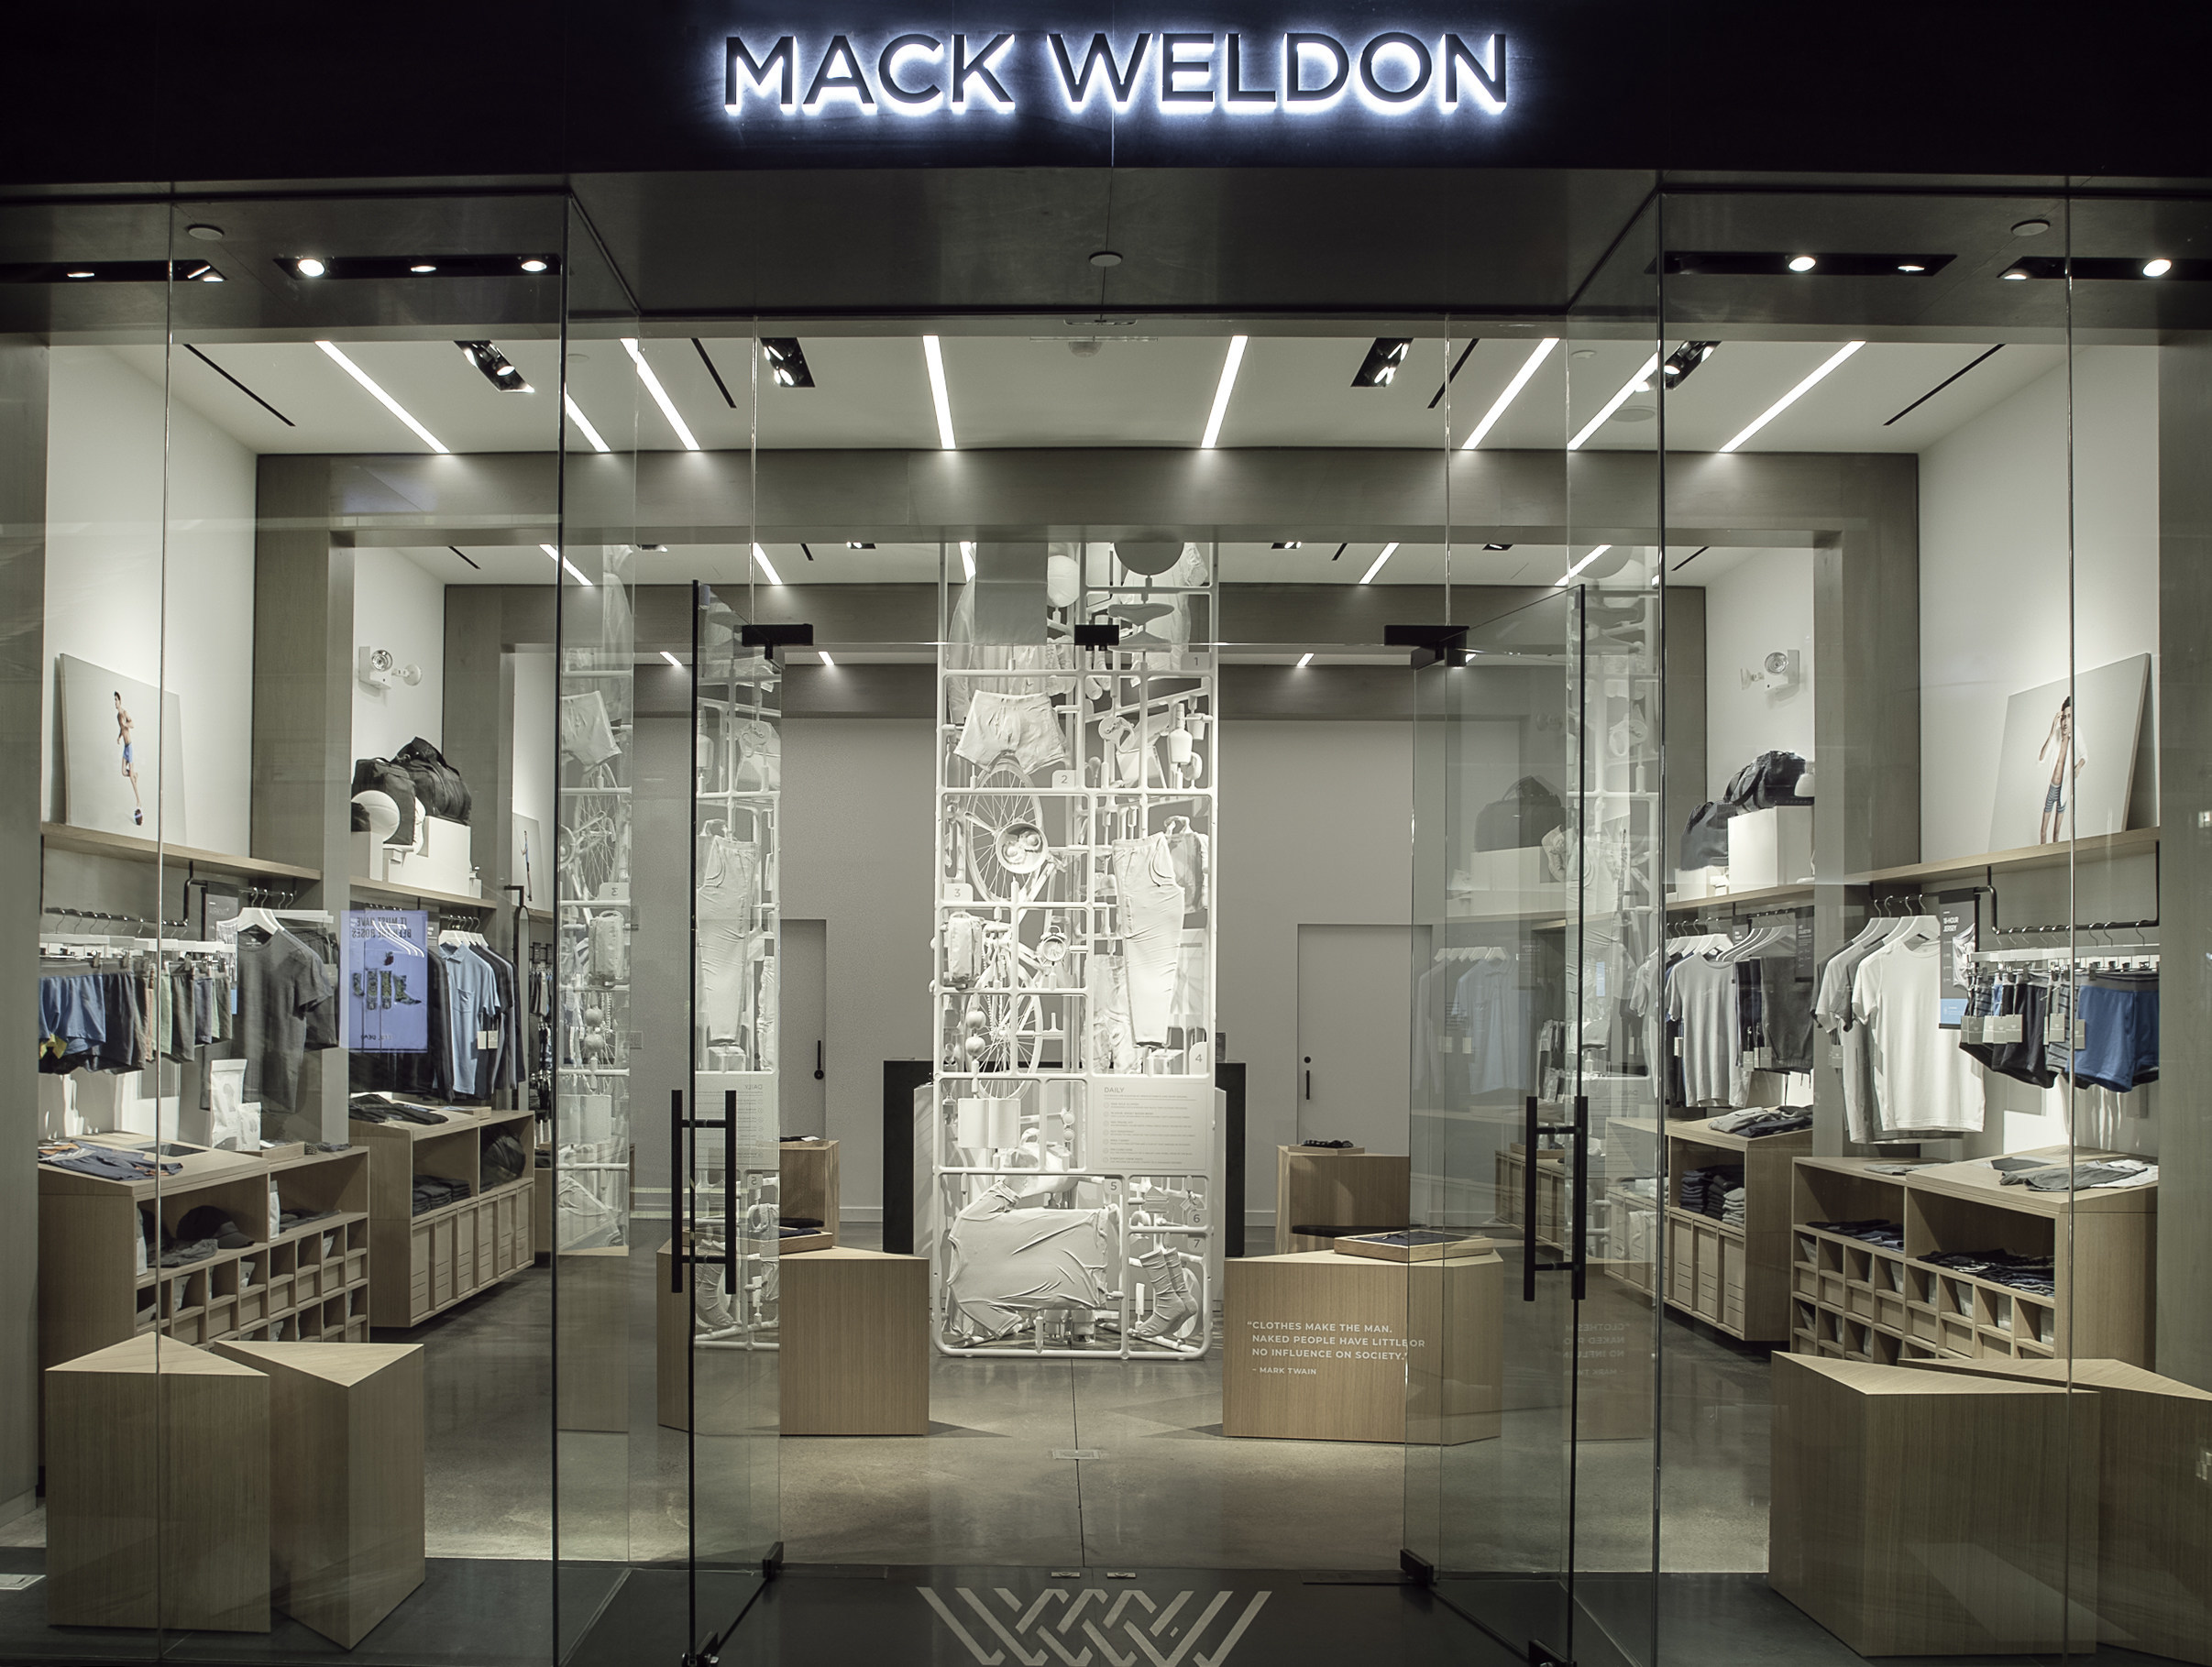 A Mack Weldon store